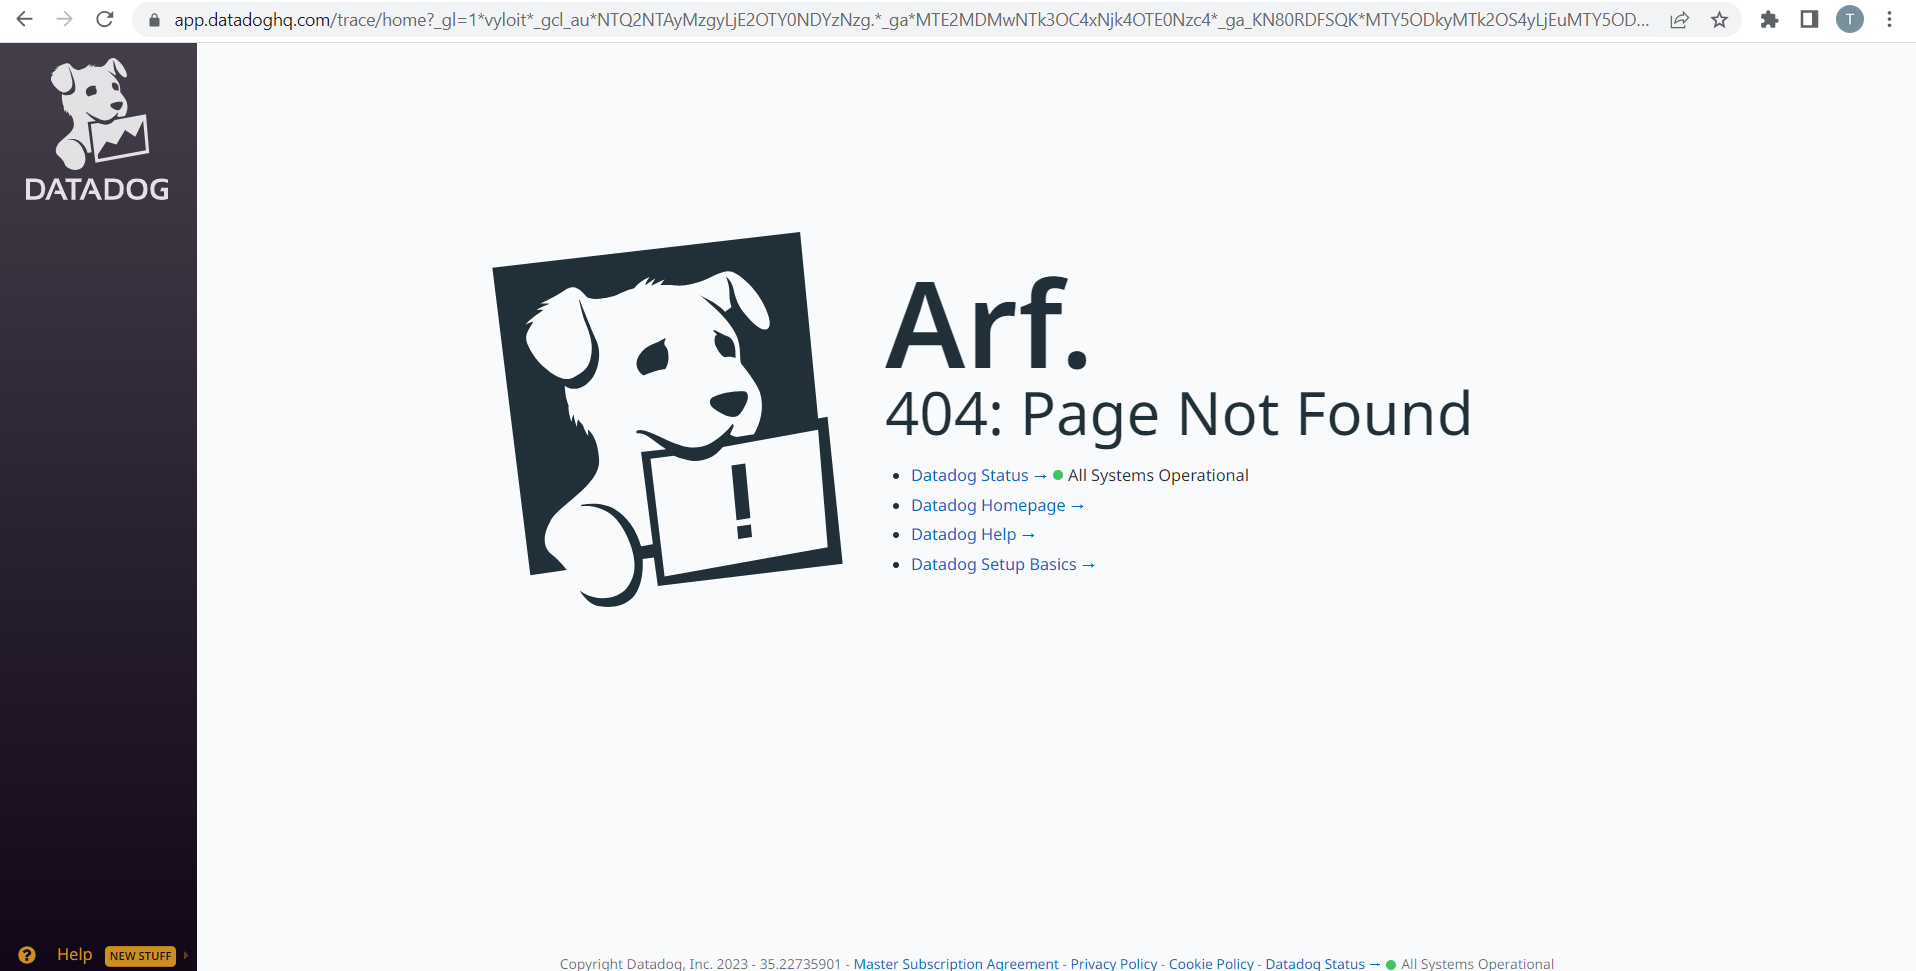 404 error on “Announcing Next-Generation APM” page's Datadog APM link